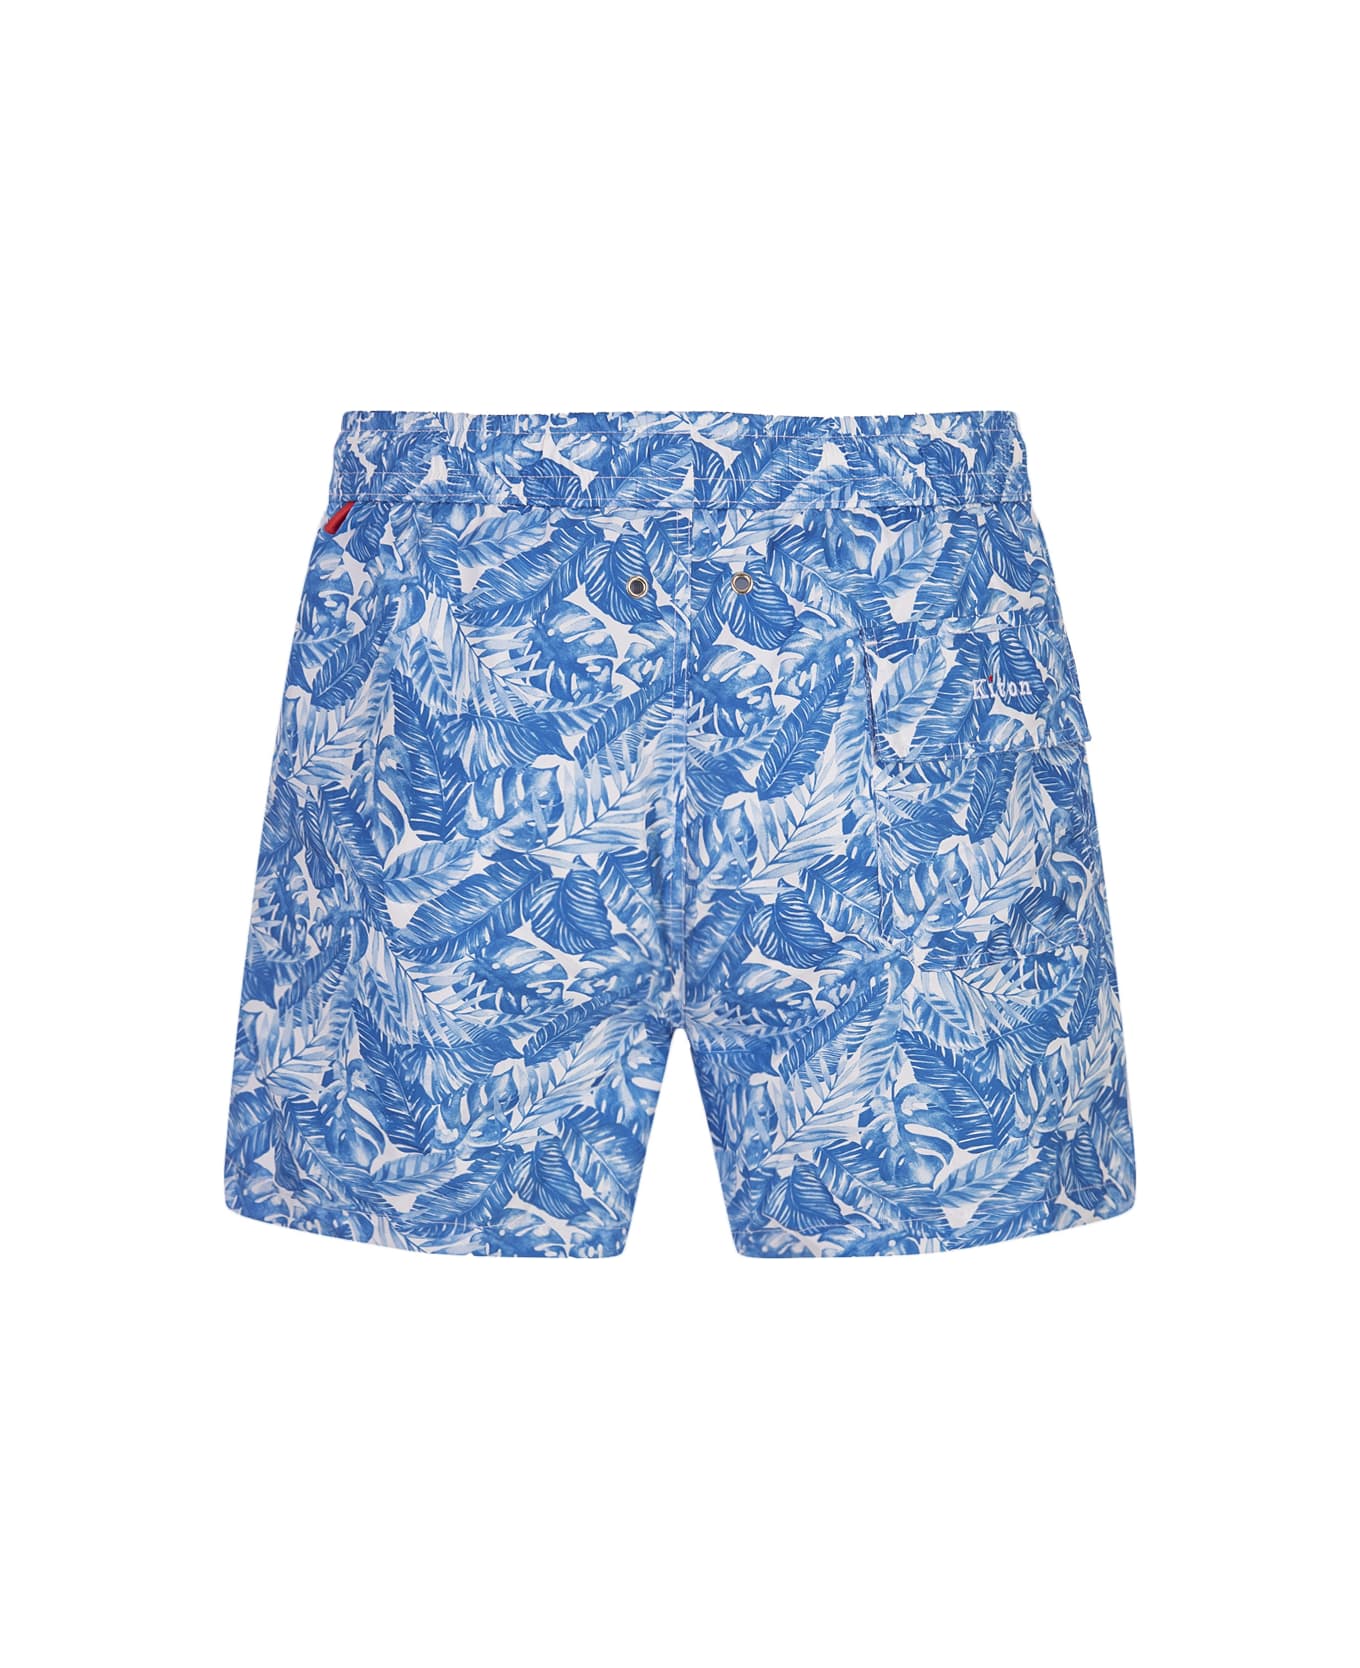 Kiton White Swim Shorts With Light Blue Foliage Print - Blue スイムトランクス